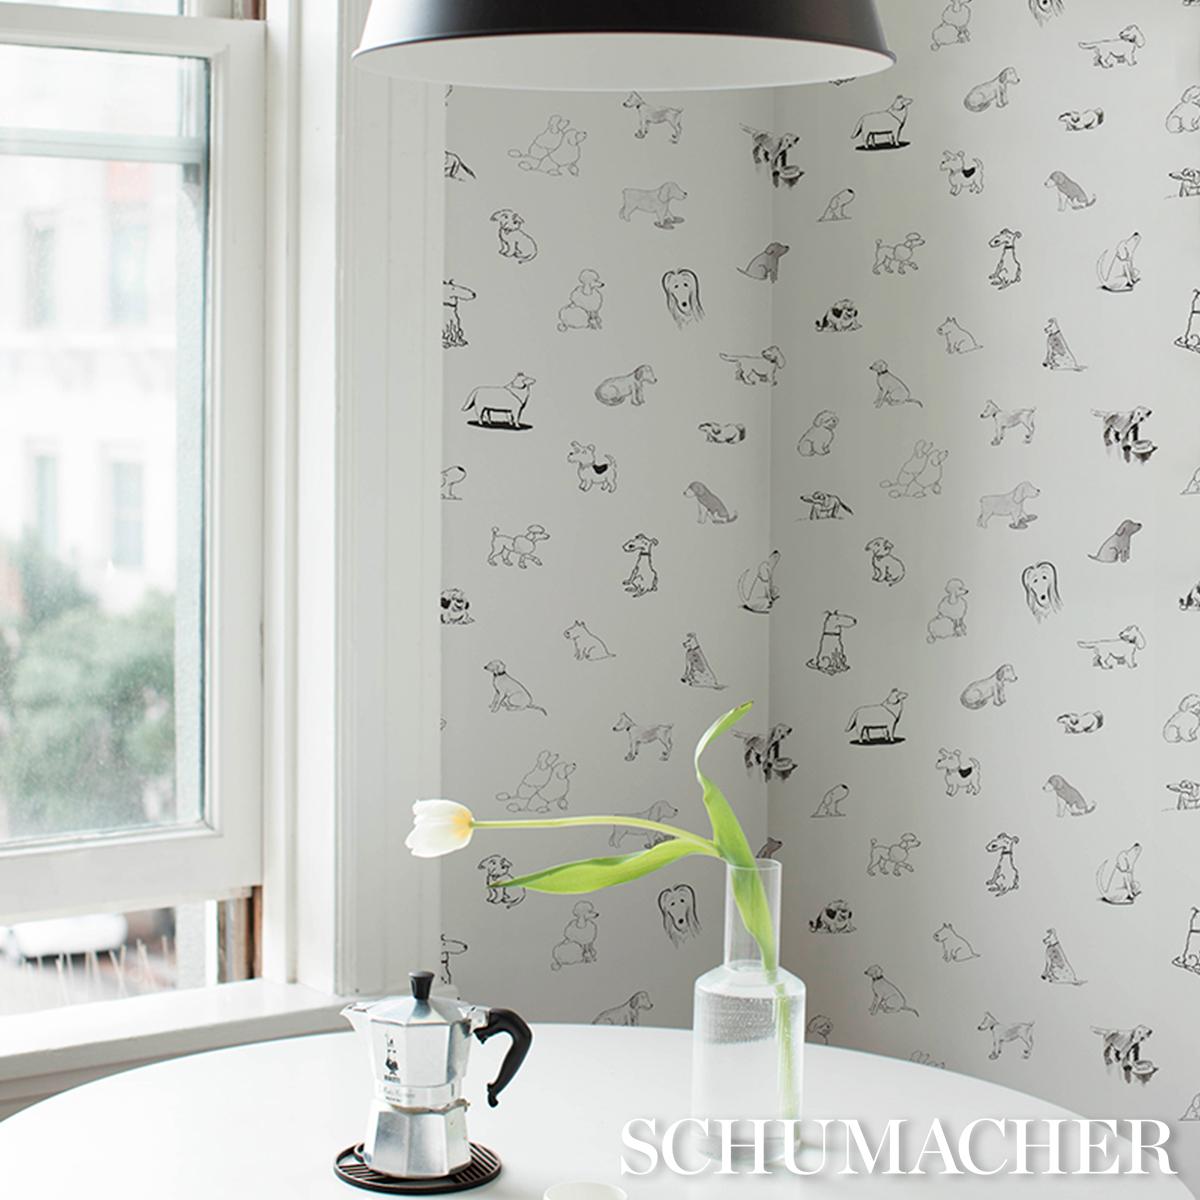 Schumacher Wallpaper 5016130 Good Dogs Everywhere in Black & White